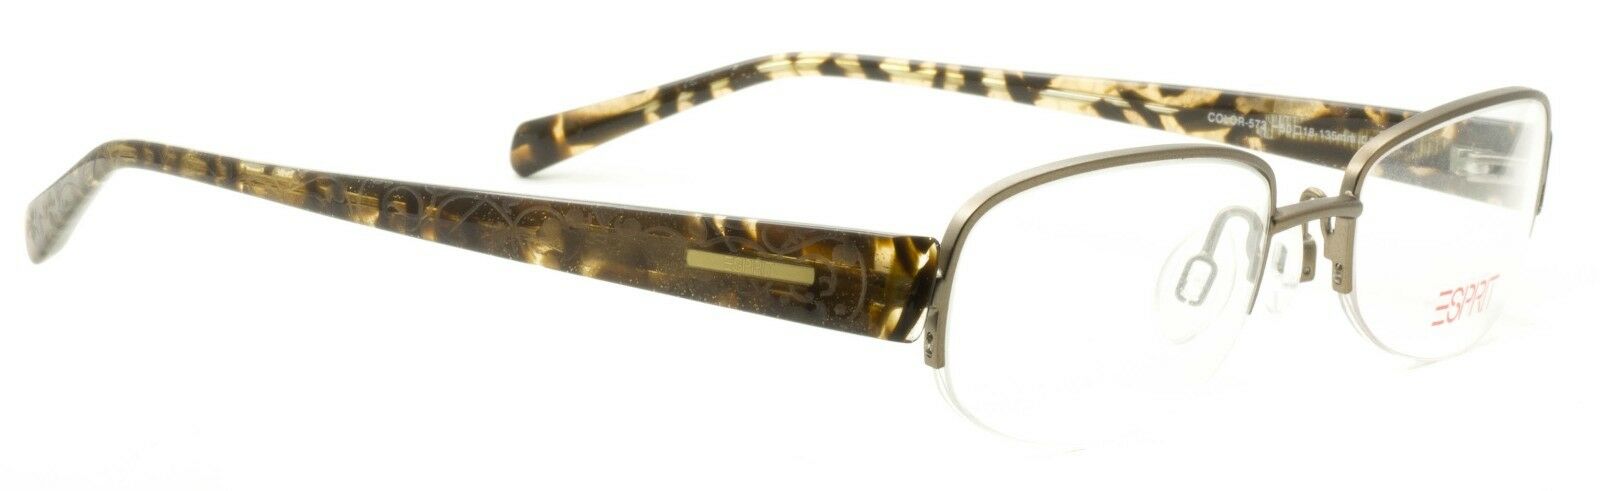 ESPRIT ET9348 COL. 573 Eyewear FRAMES RX Optical NEW Glasses Eyeglasses New BNIB